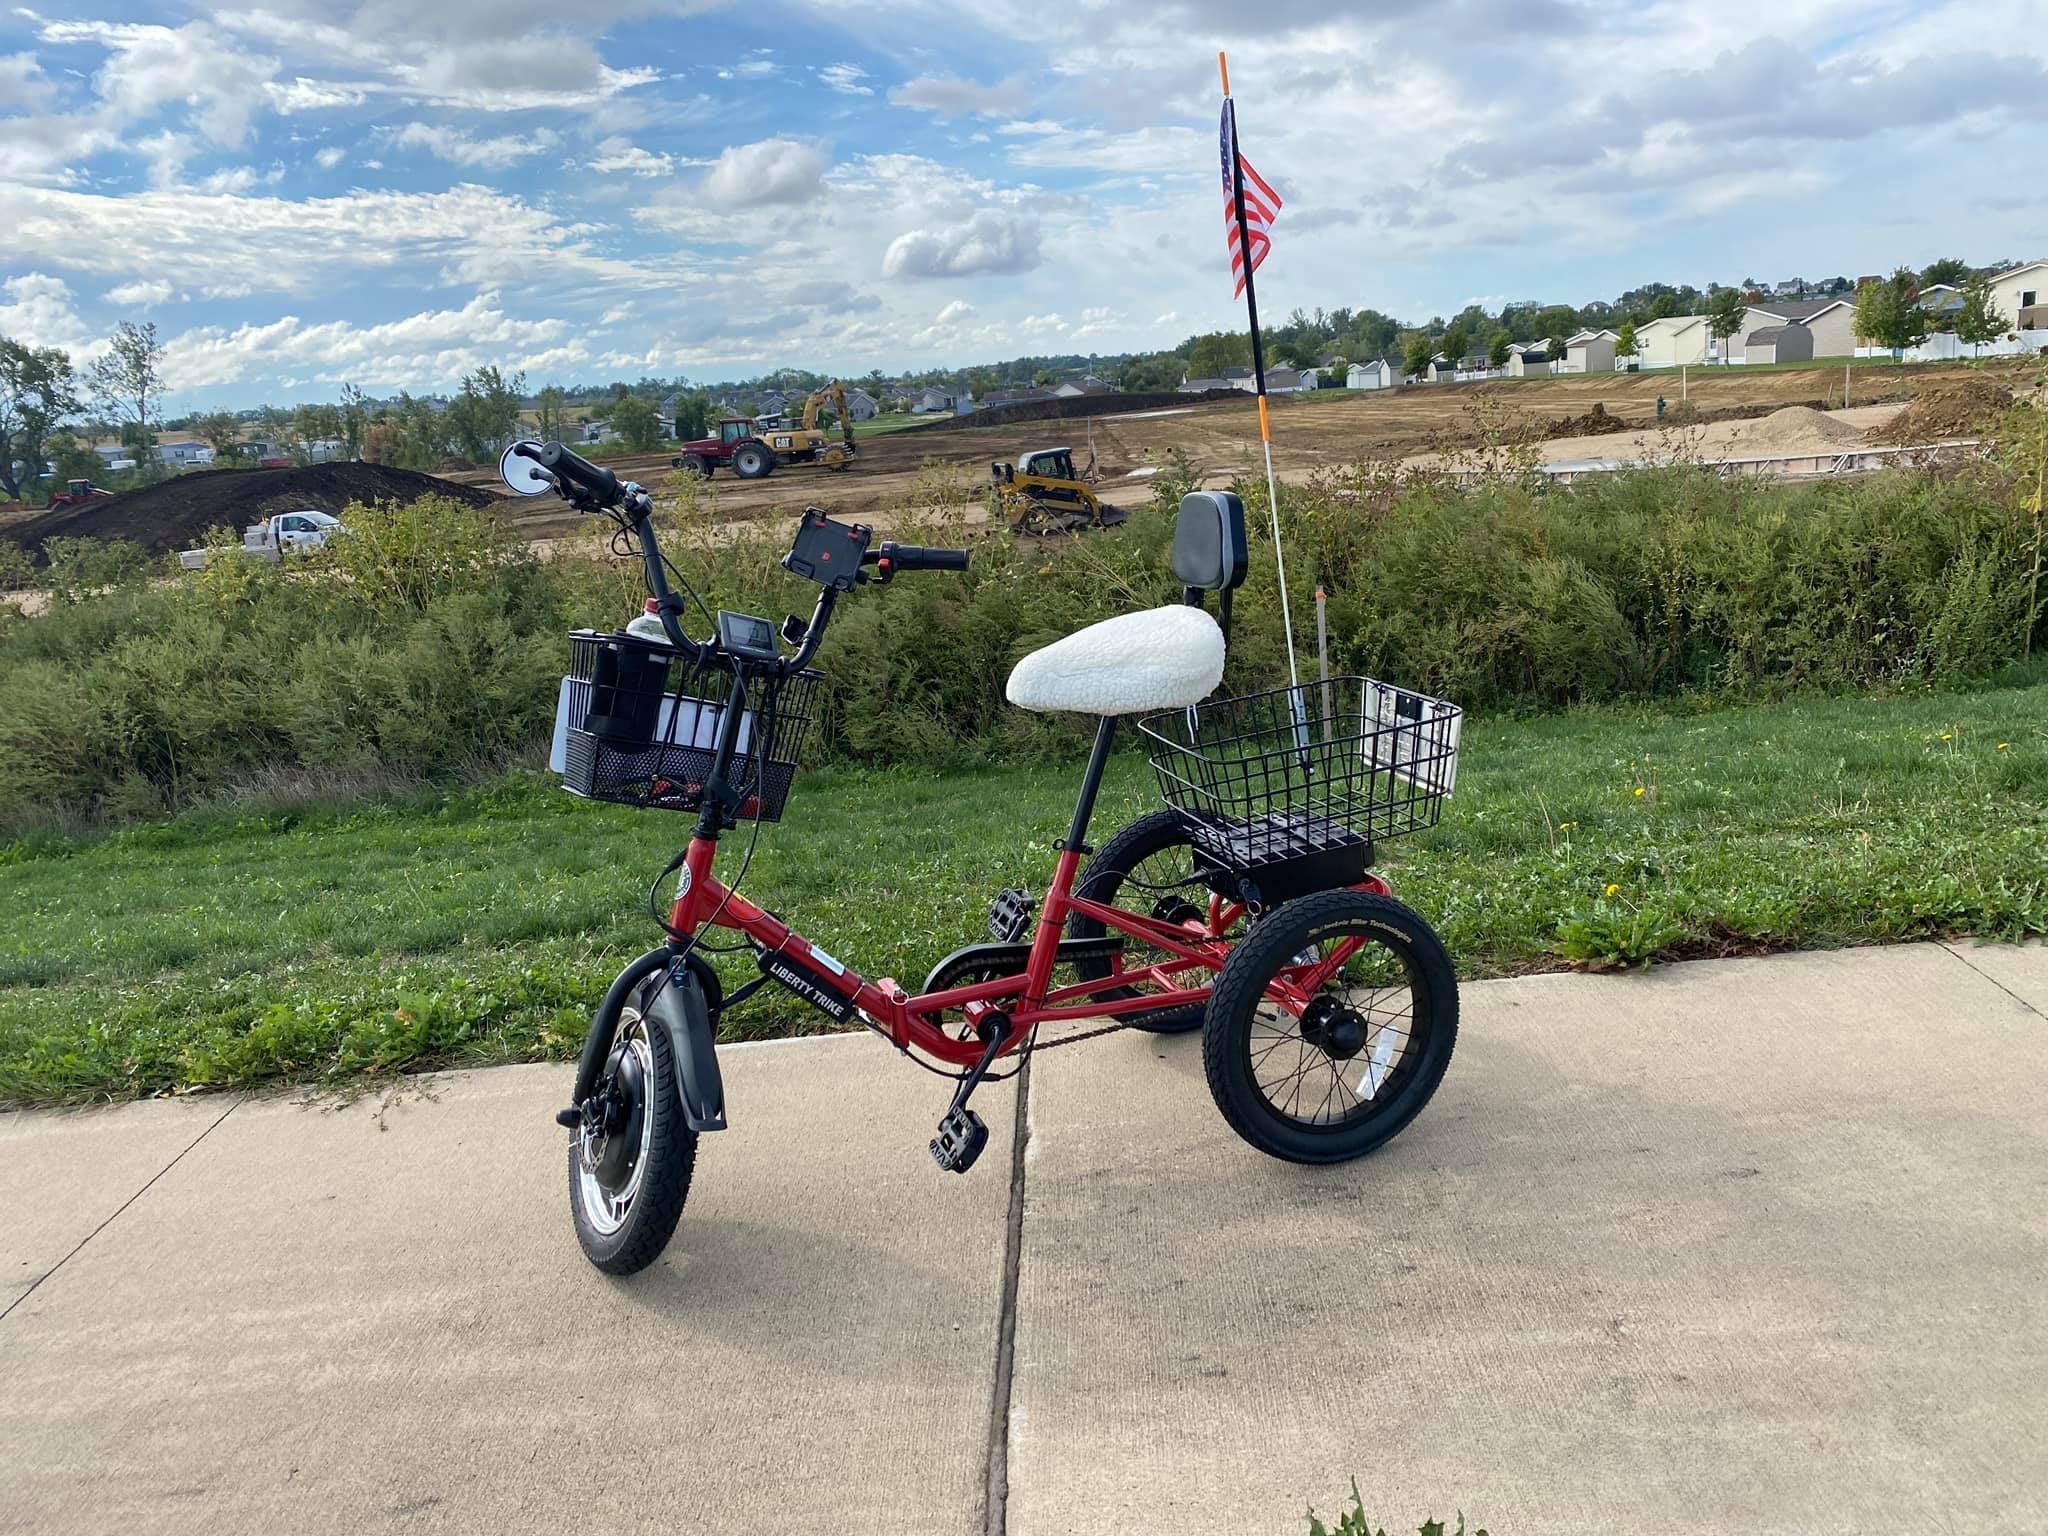 Liberty Trike